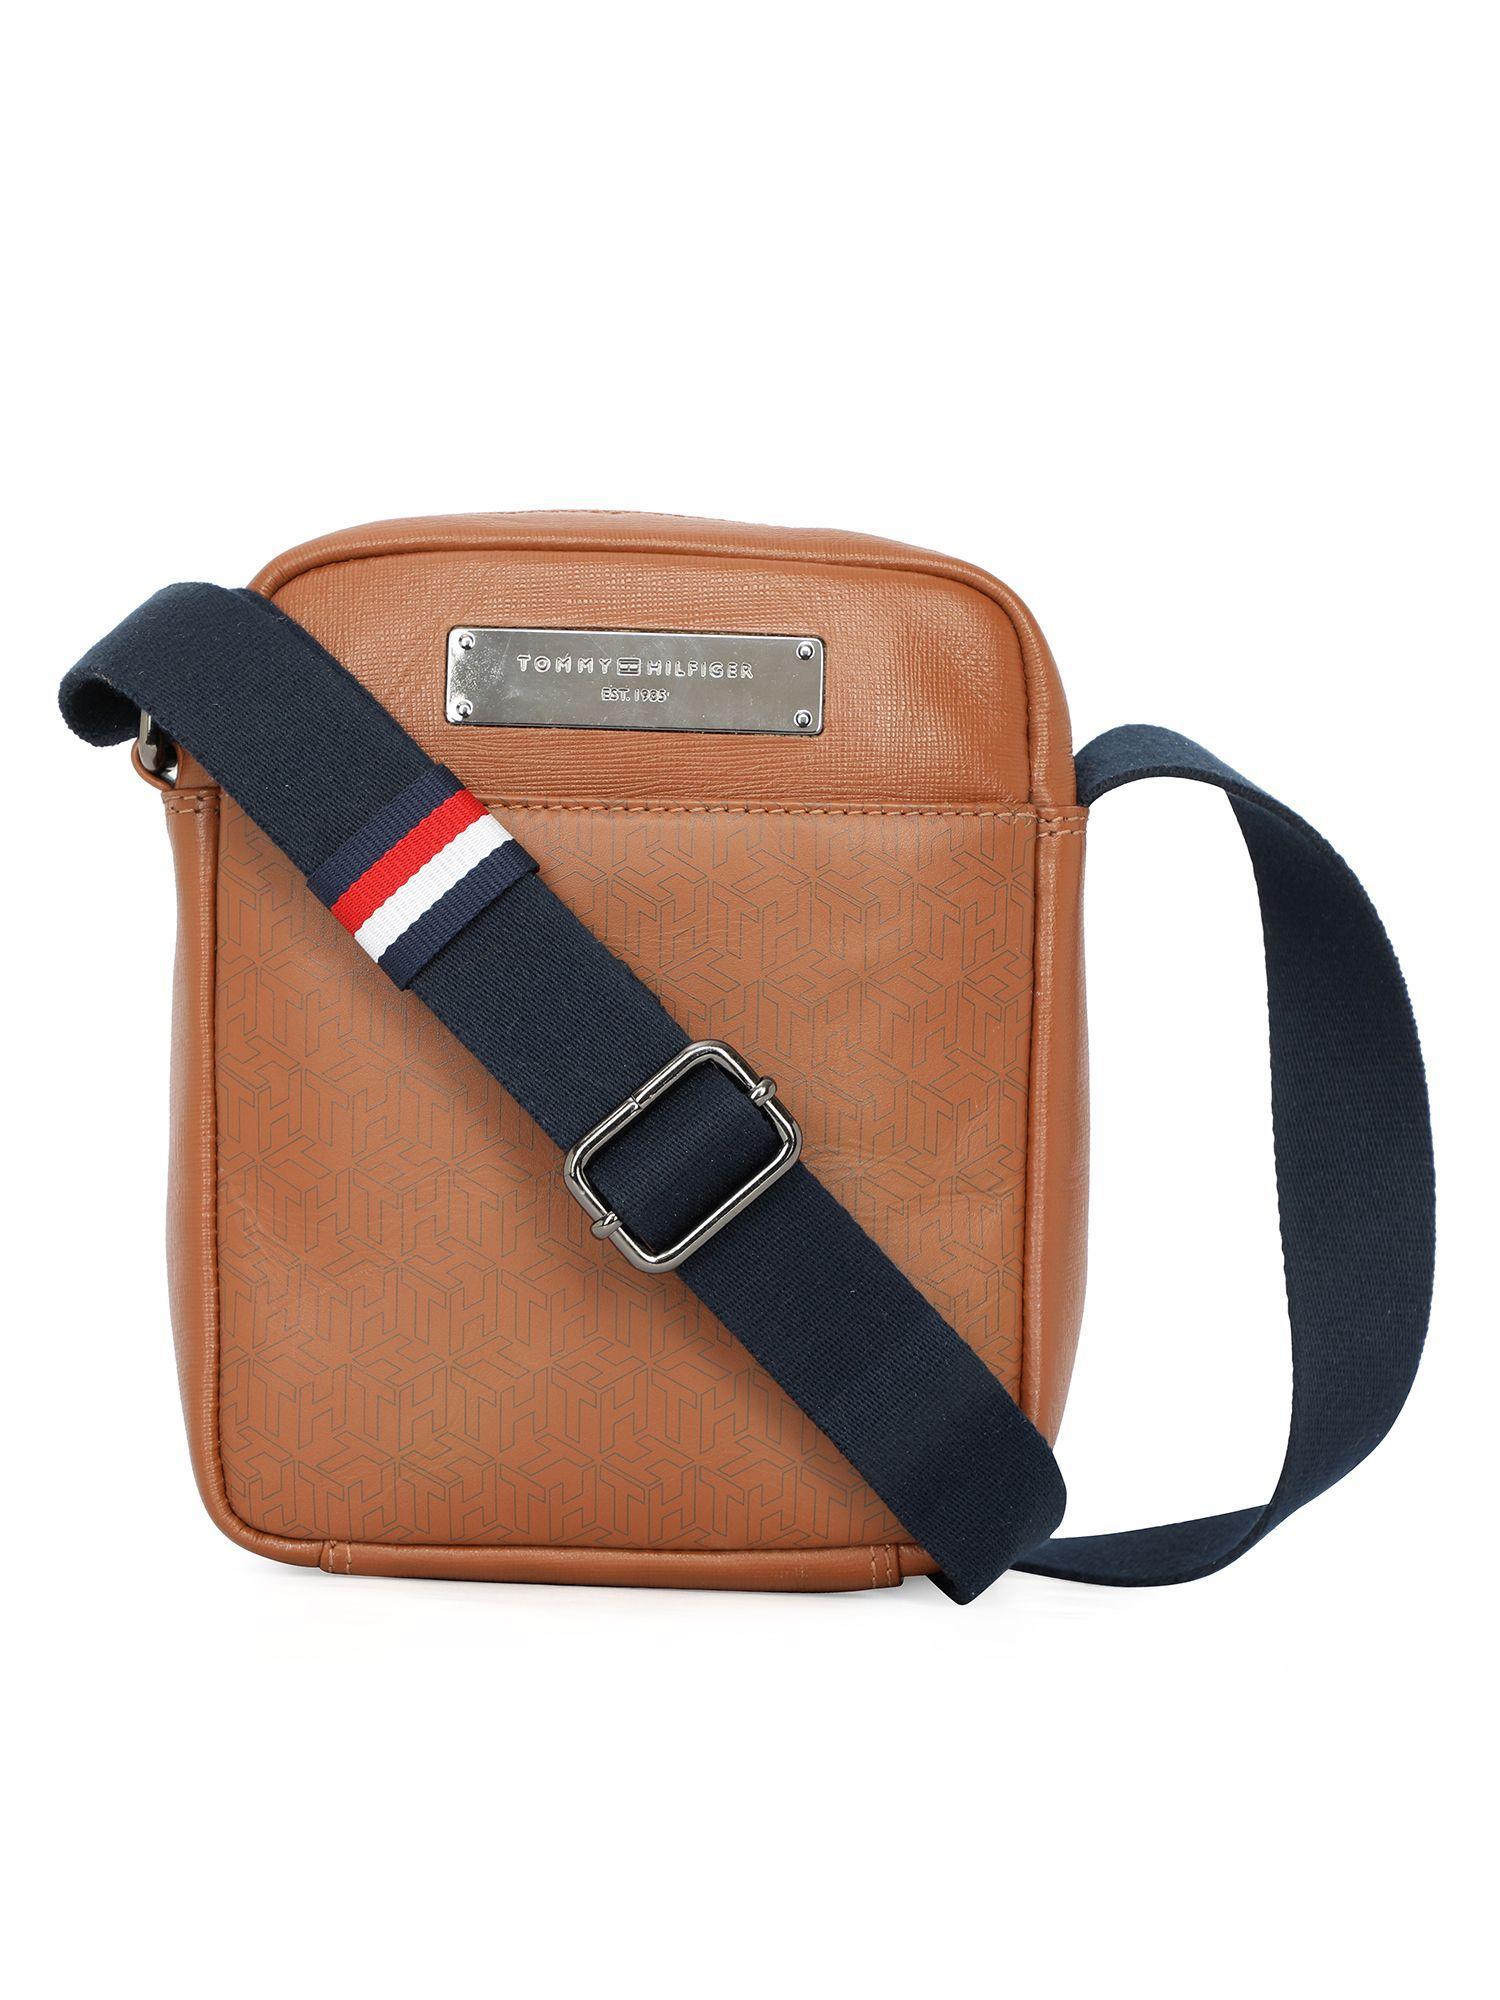 ferguson leather travelling crossbody bag solid tan (s)